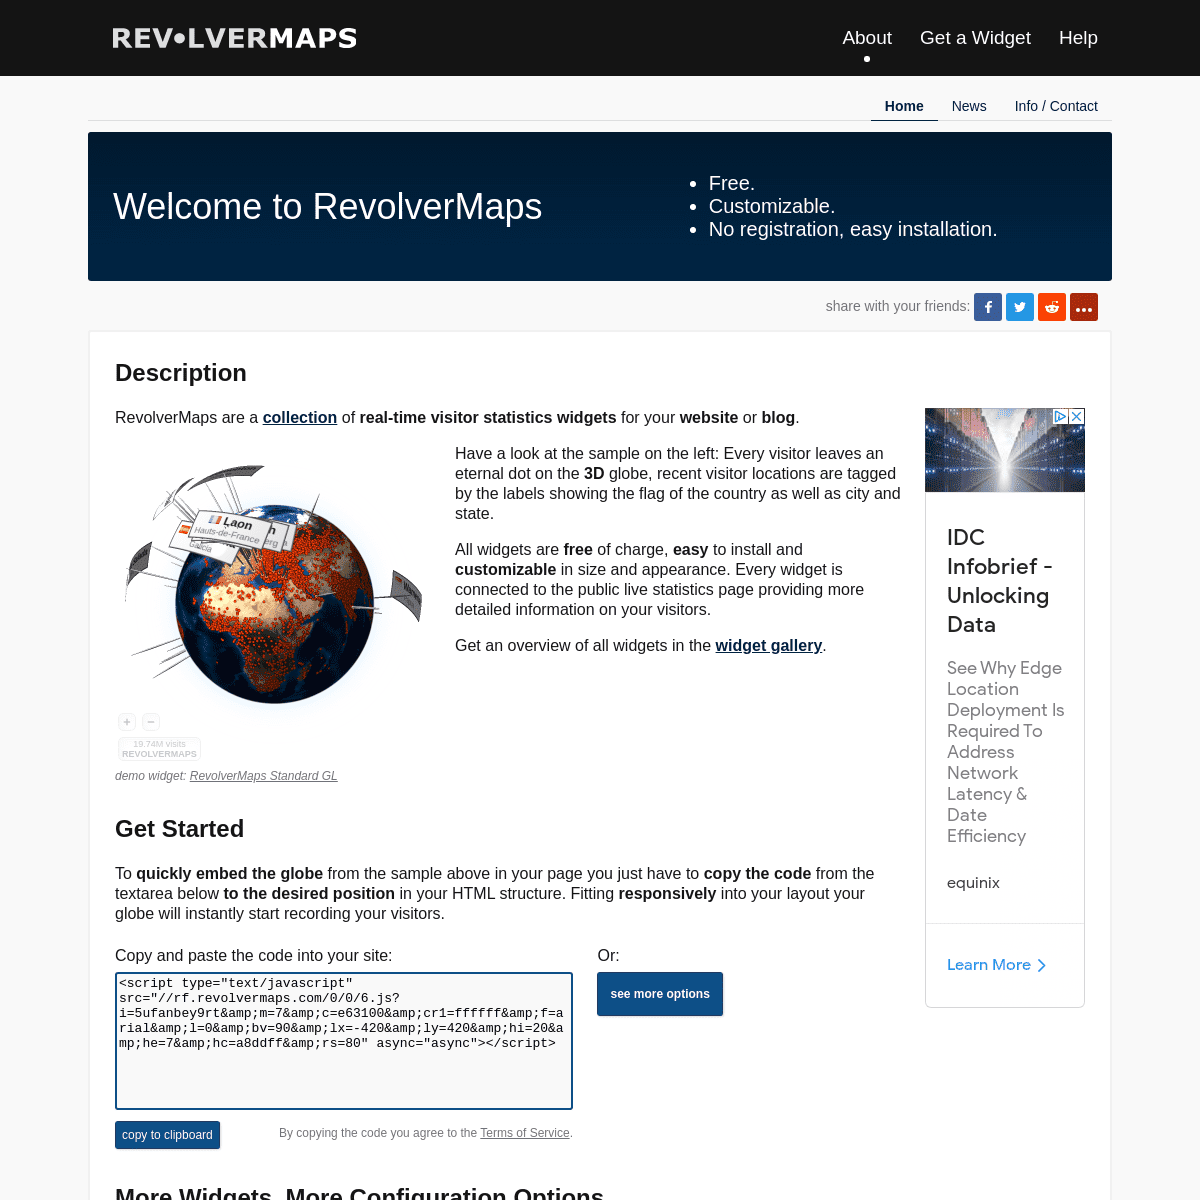 A complete backup of https://revolvermaps.com